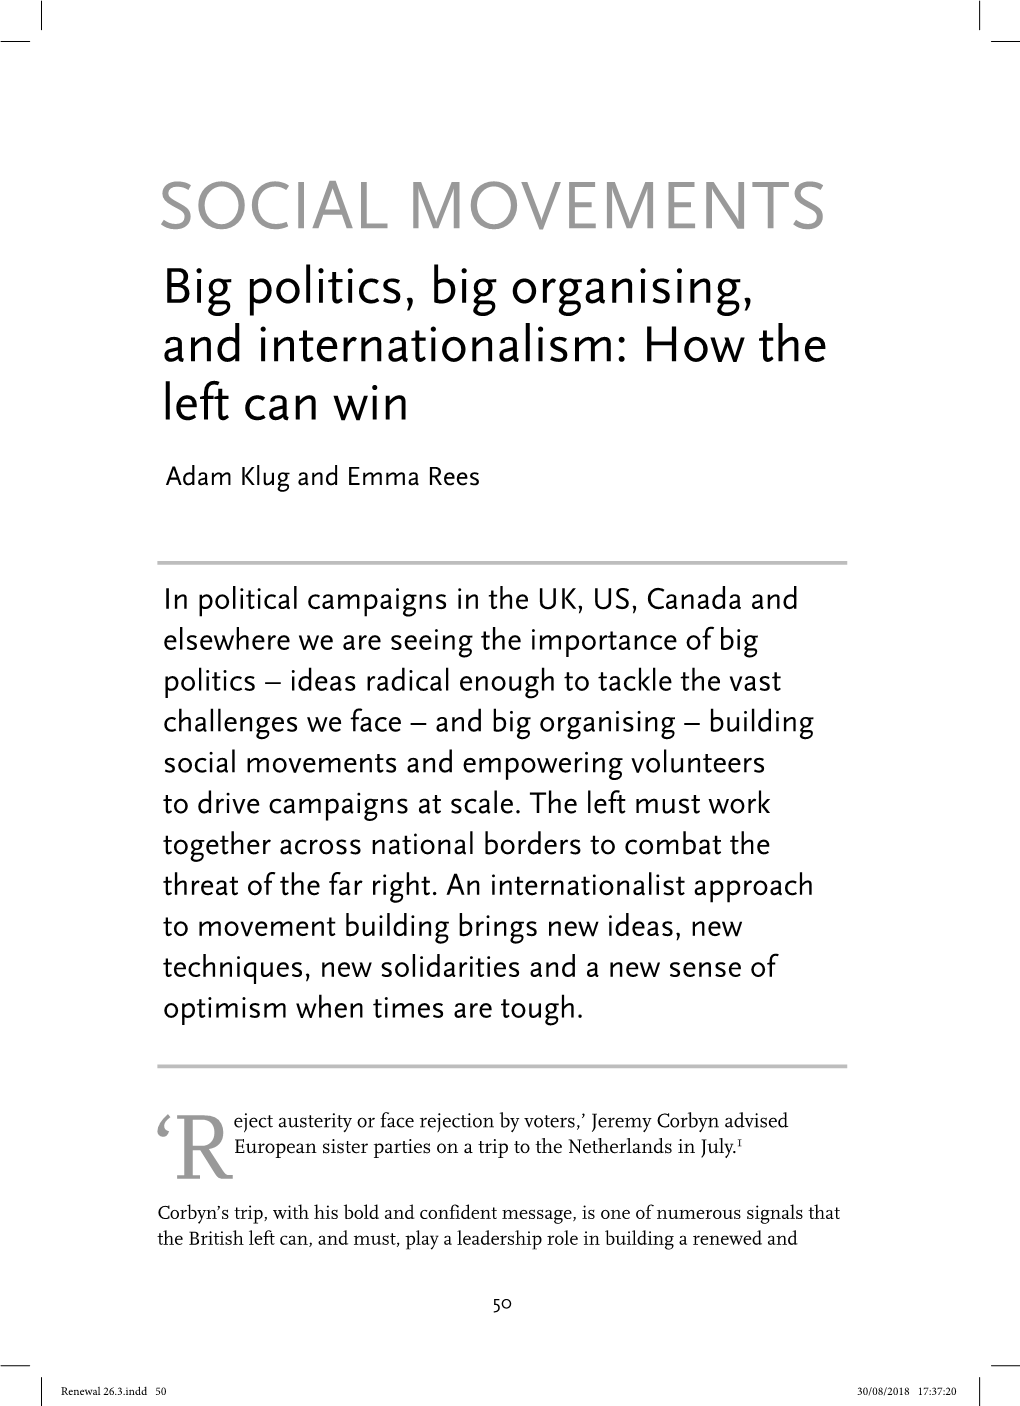 Adam Klug and Emma Rees, Big Politics, Big Organising, and Internationalism